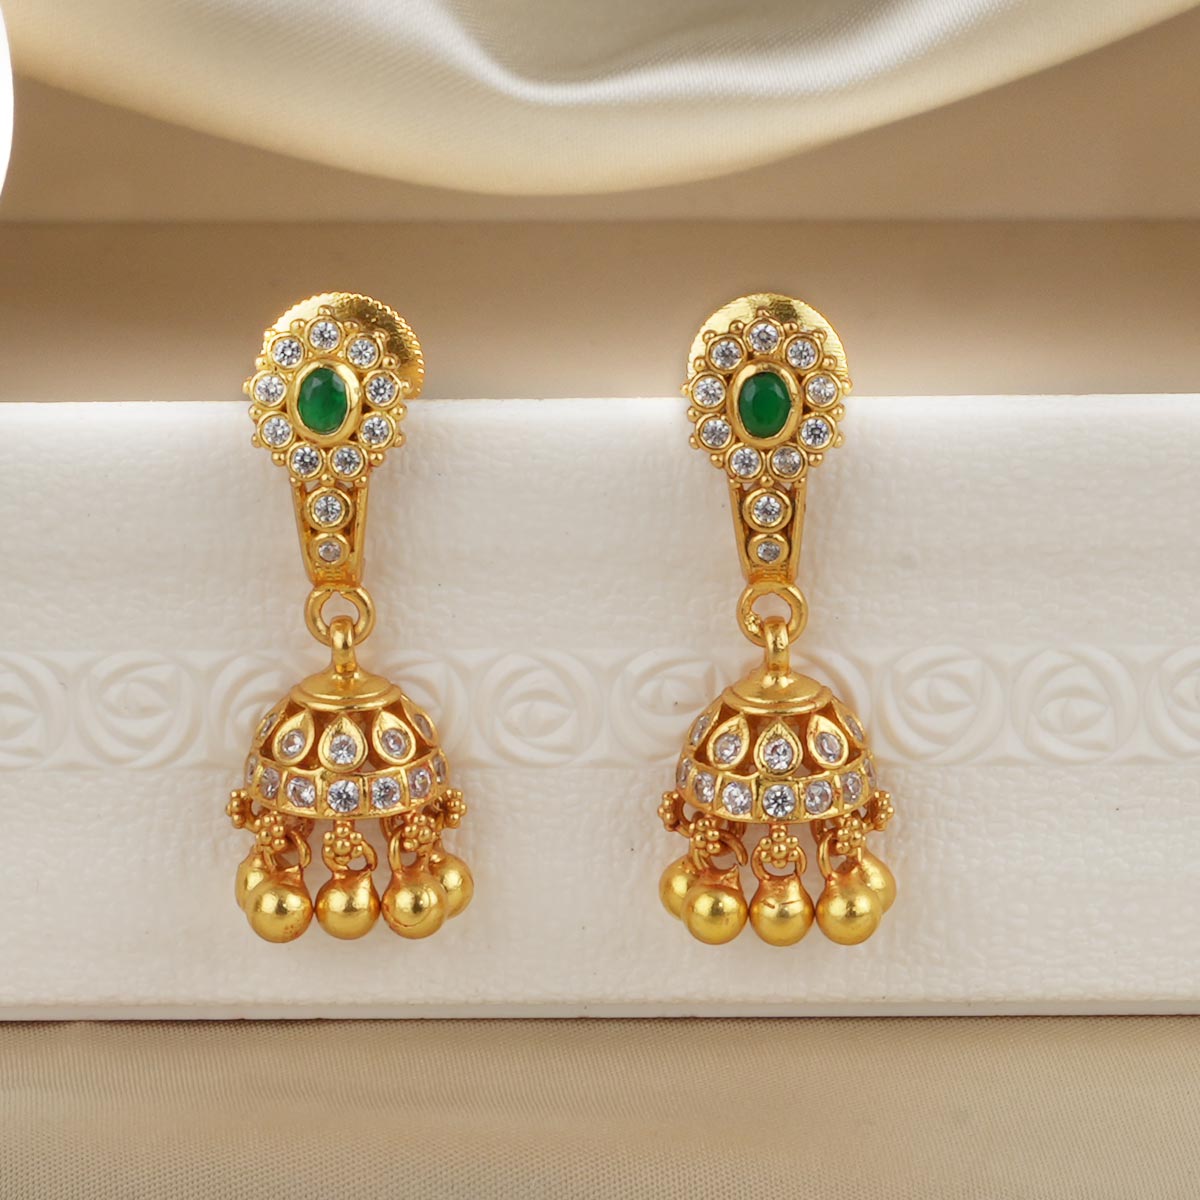 Buy Reflection of You Green Onyx Stud Earrings Online in India | Zariin